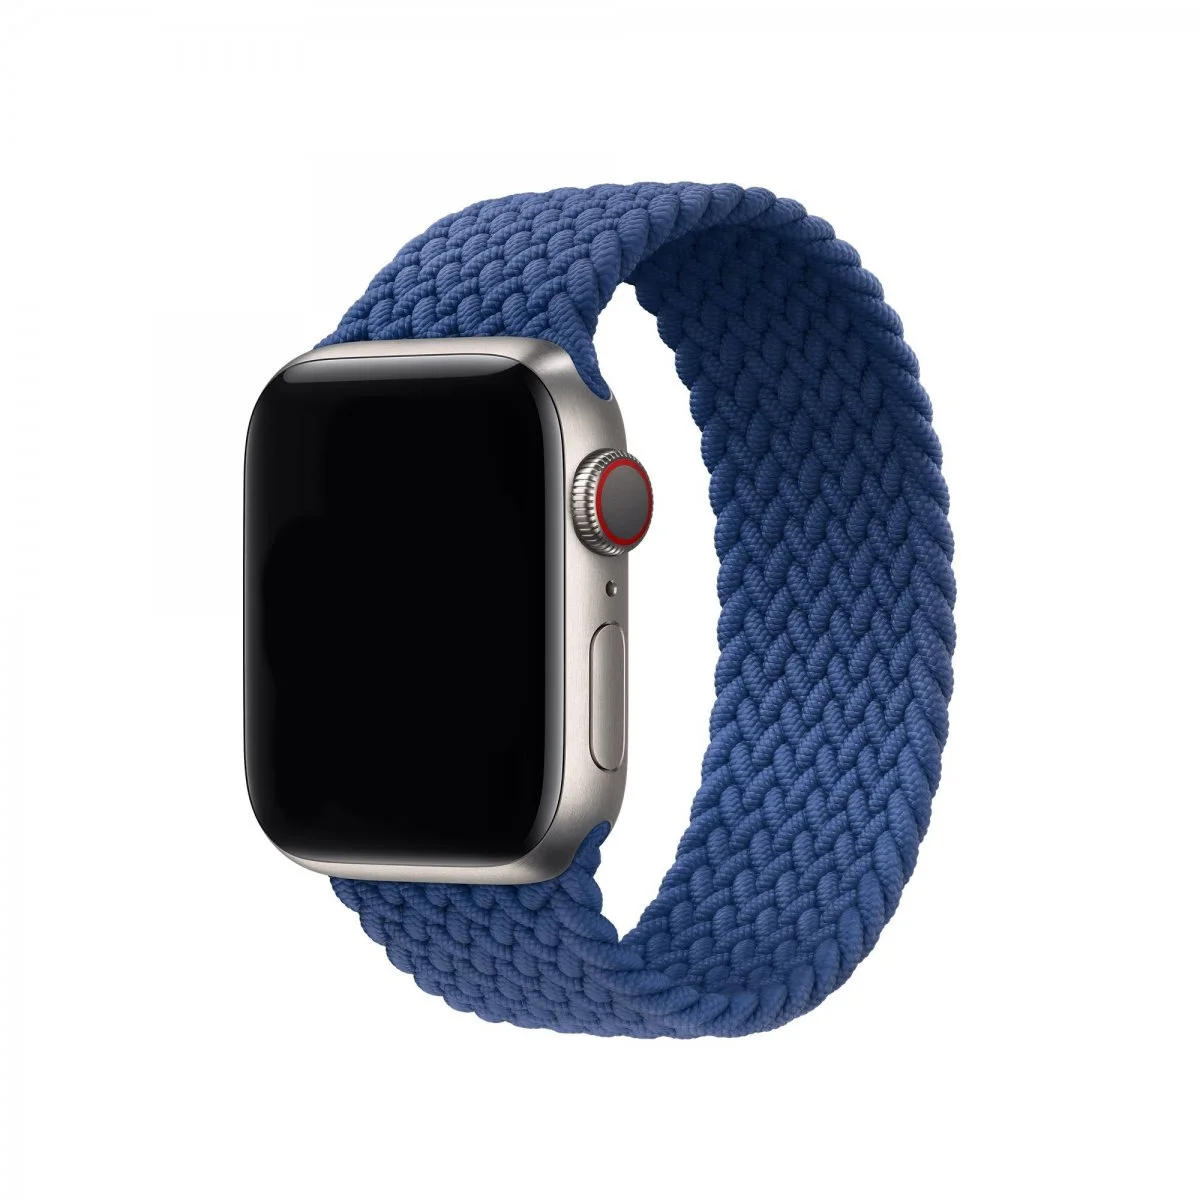 Řemínek iMore Braided Solo Loop Apple Watch Series 1/2/3 38mm - atlanticky modrý (M)